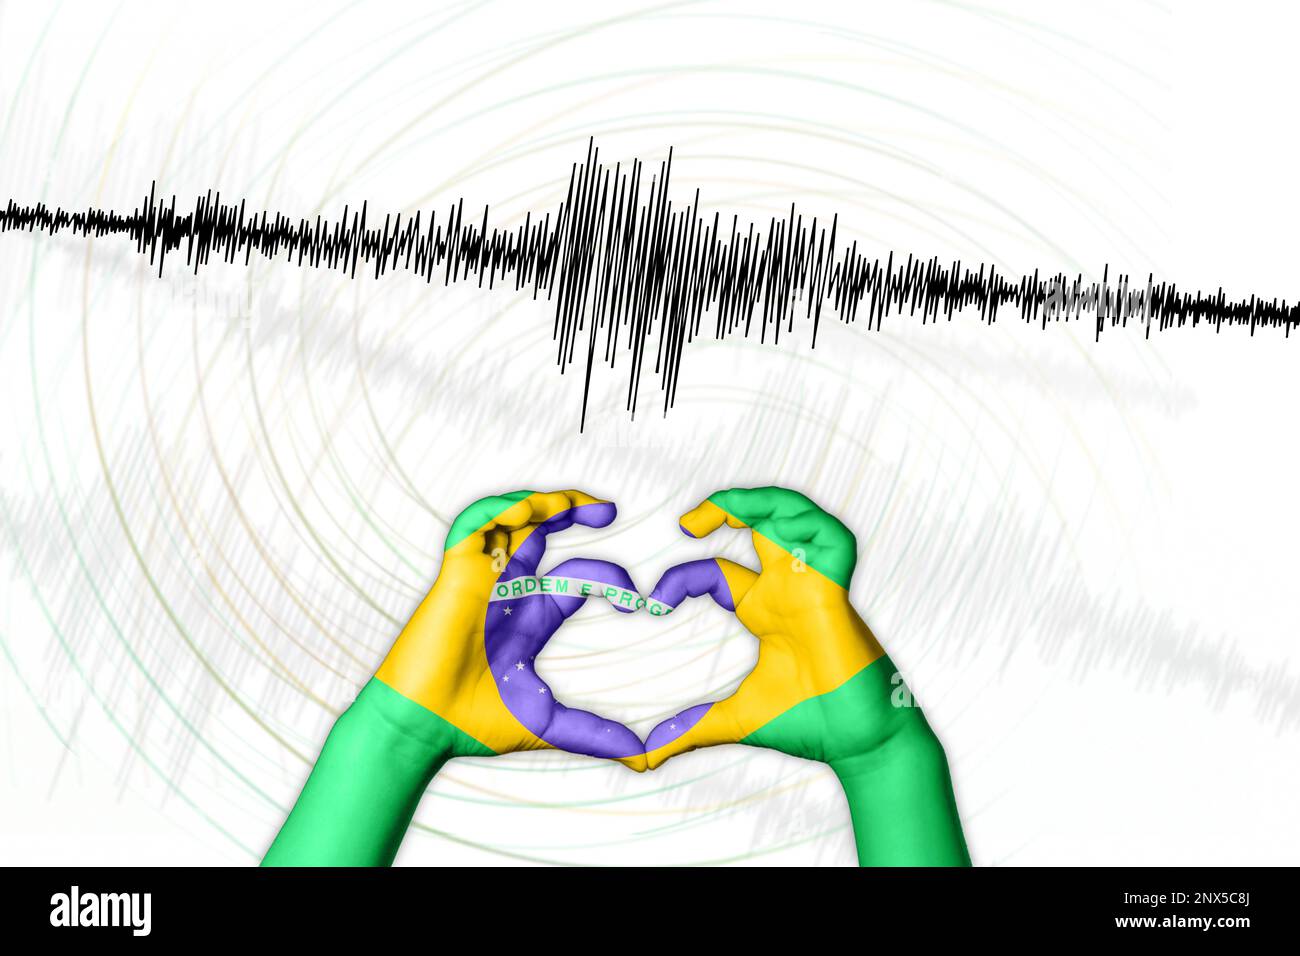 Erdbeben Brasilien Symbol der Heart Richter Scale Stockfoto